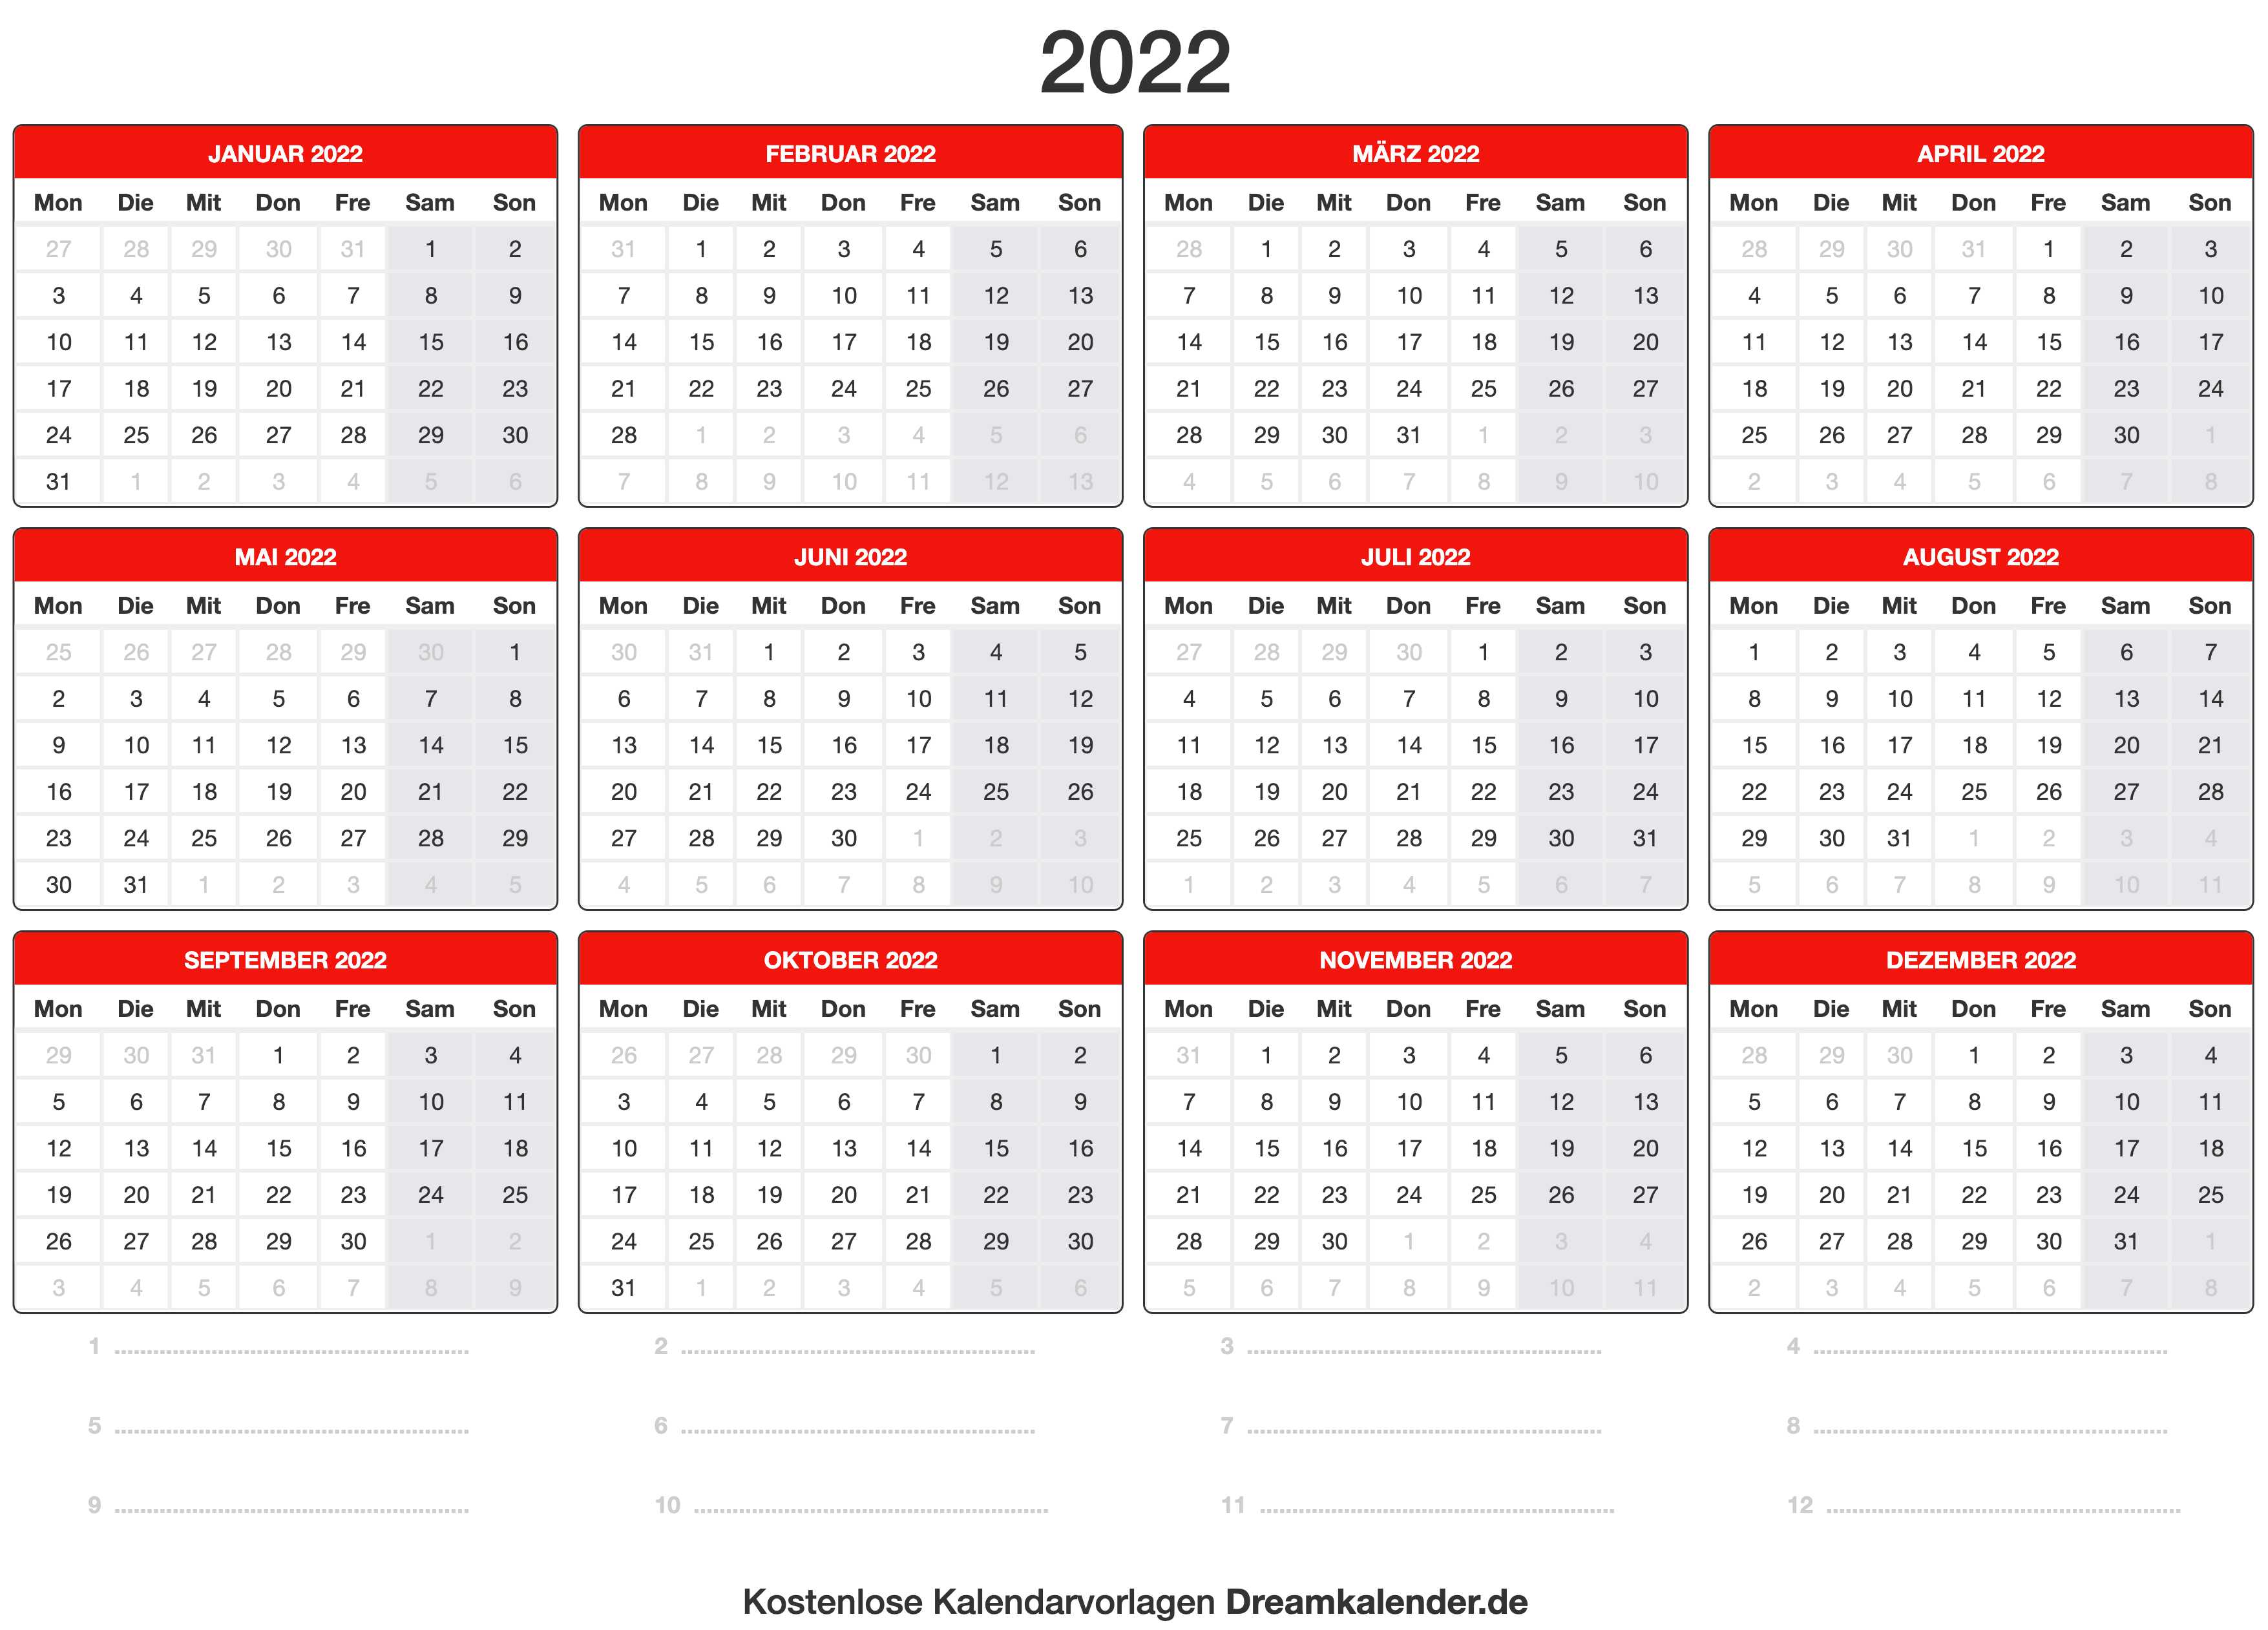 Kalender 2022 aesthetic pdf - plechecker